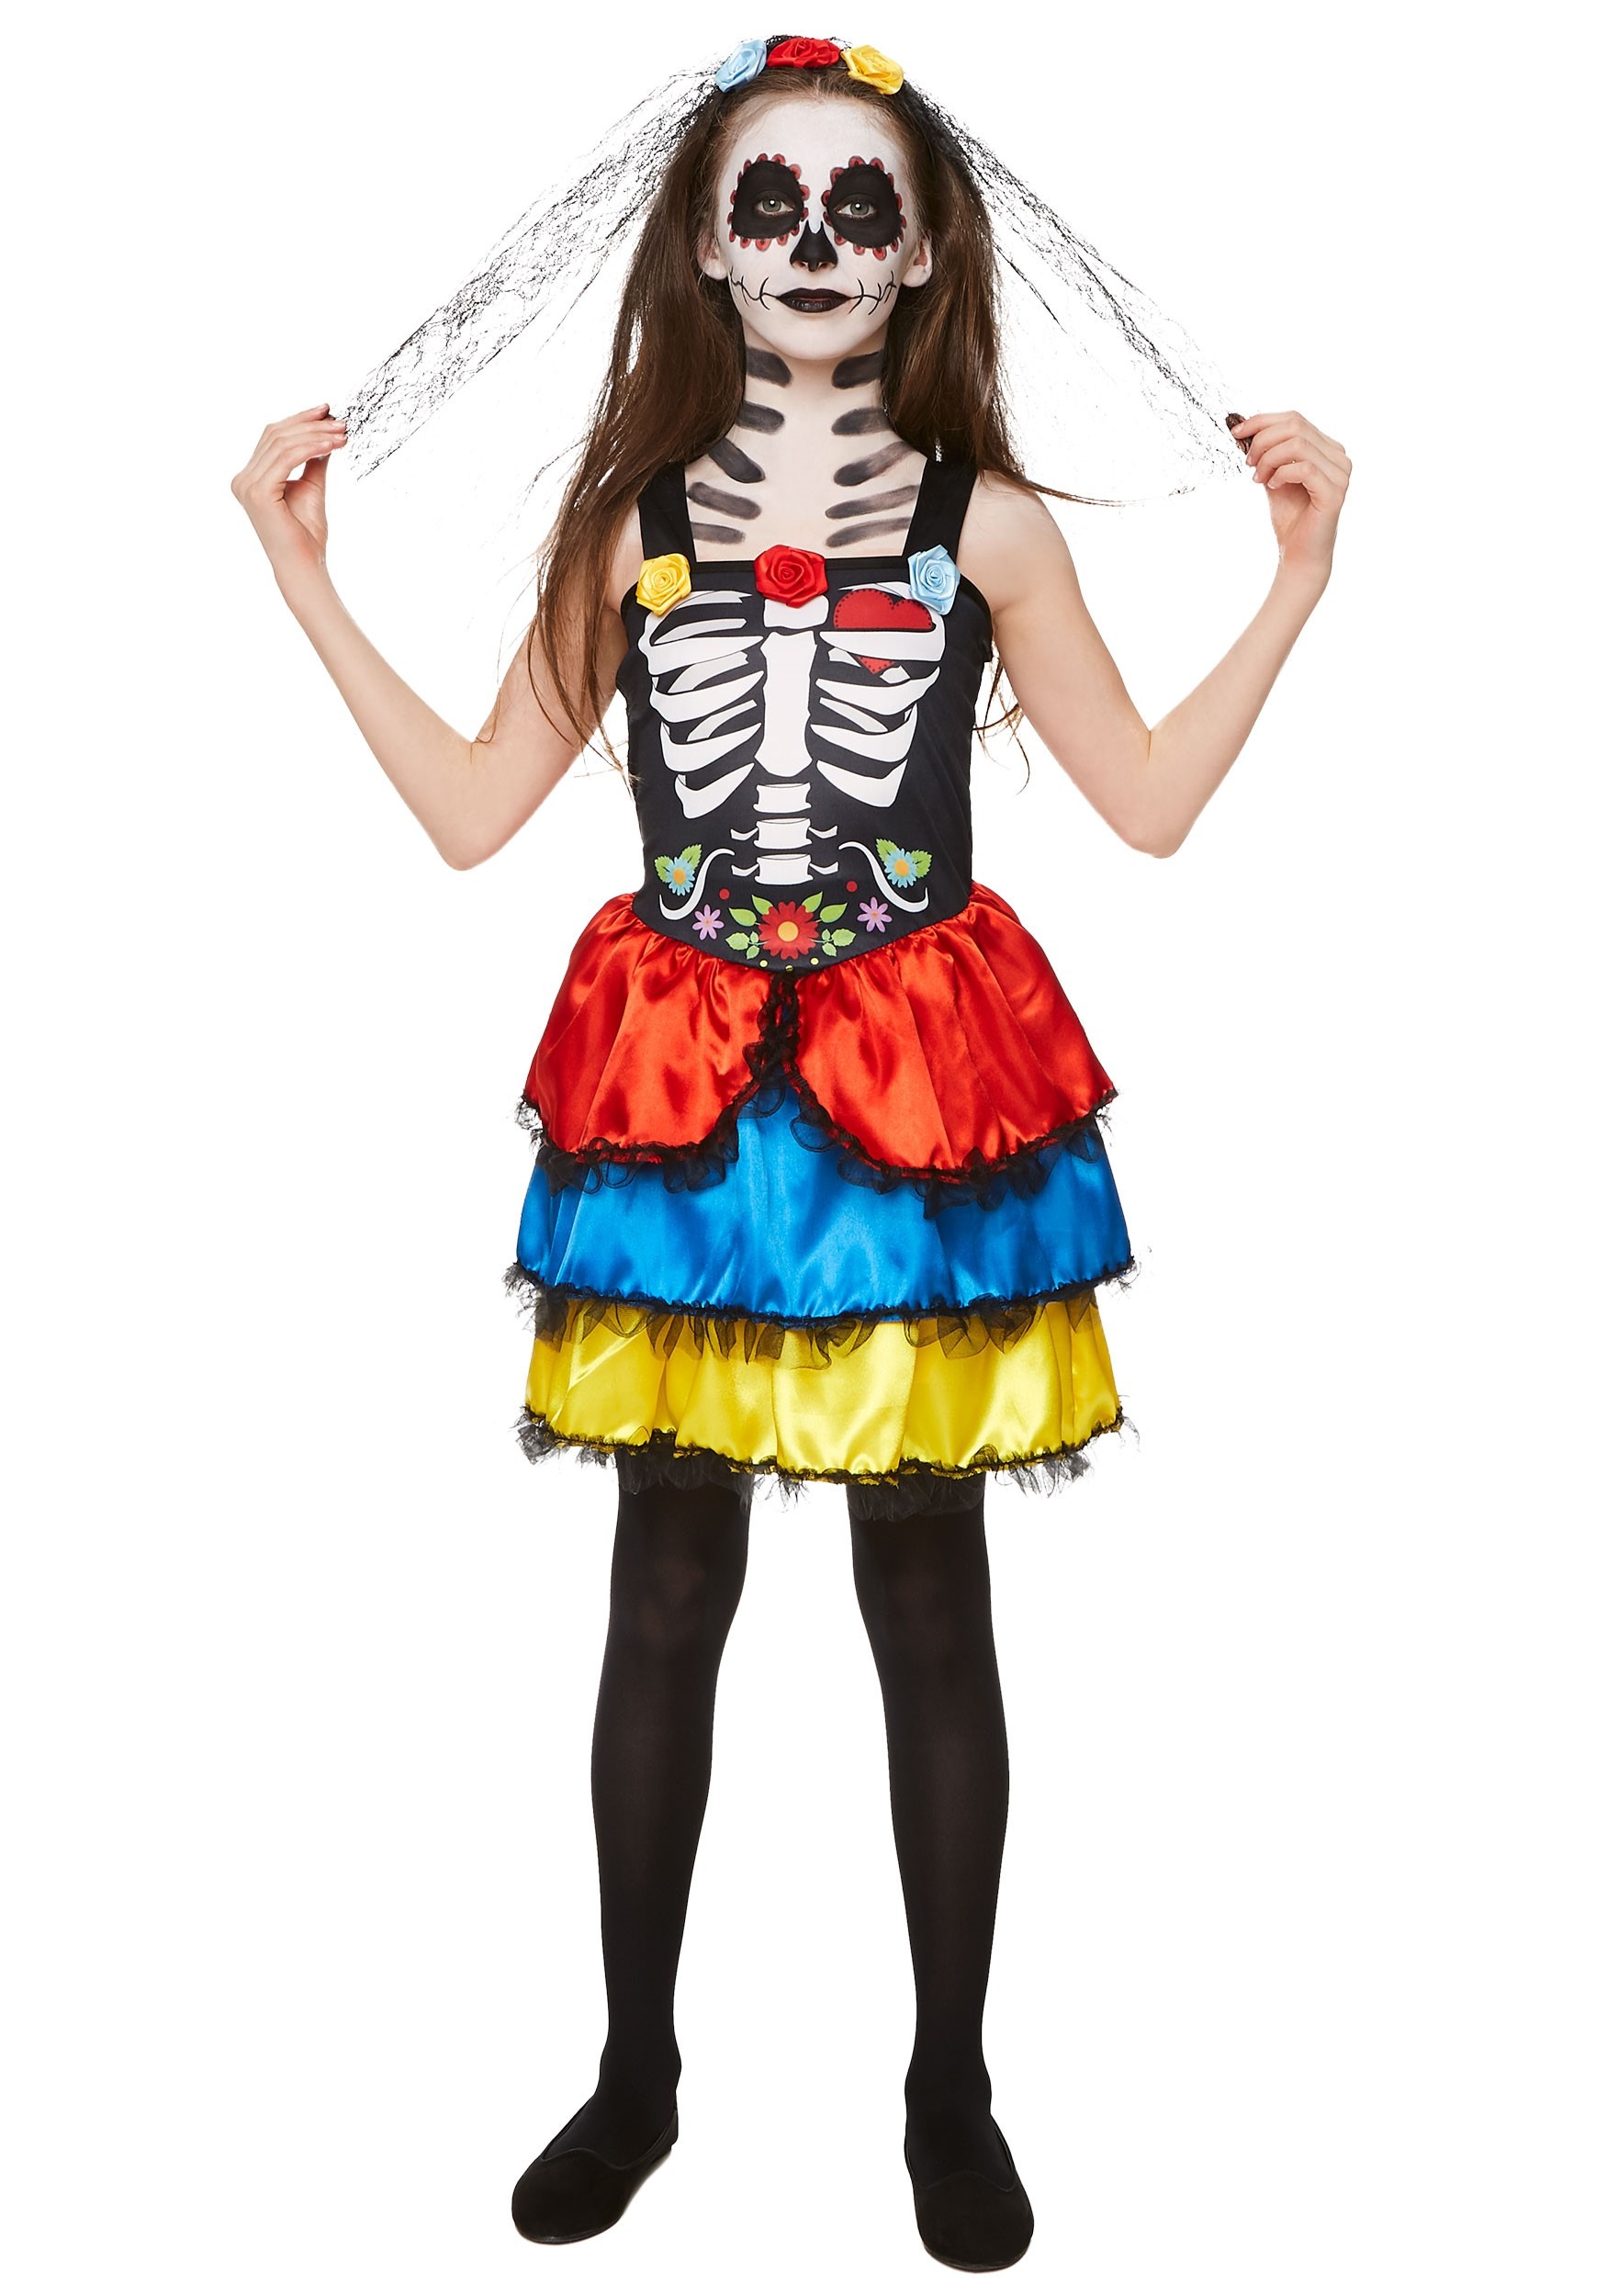 Zombie Untoter Skelett Junge Mädchen Kostüm Halloween Karneval Day of the Dead